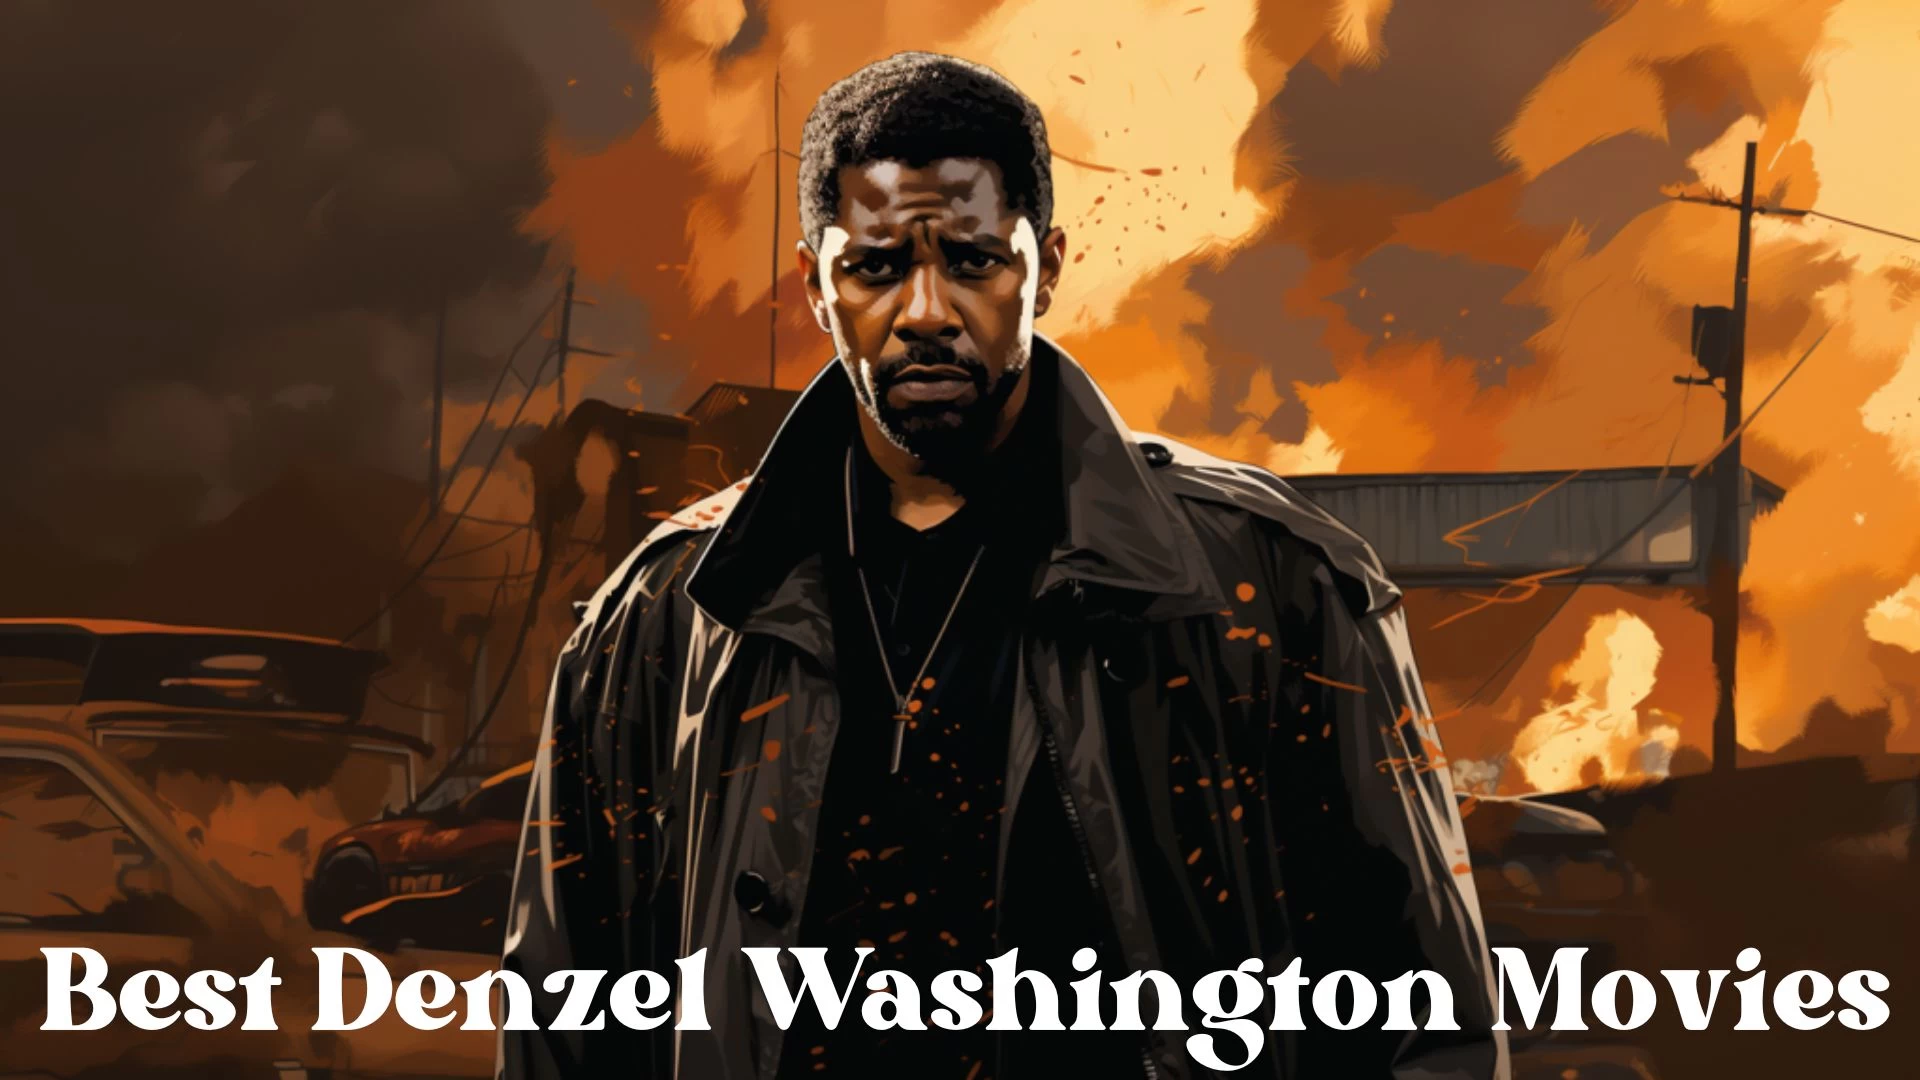 Best Denzel Washington Movies - Top 10 Outstanding Films